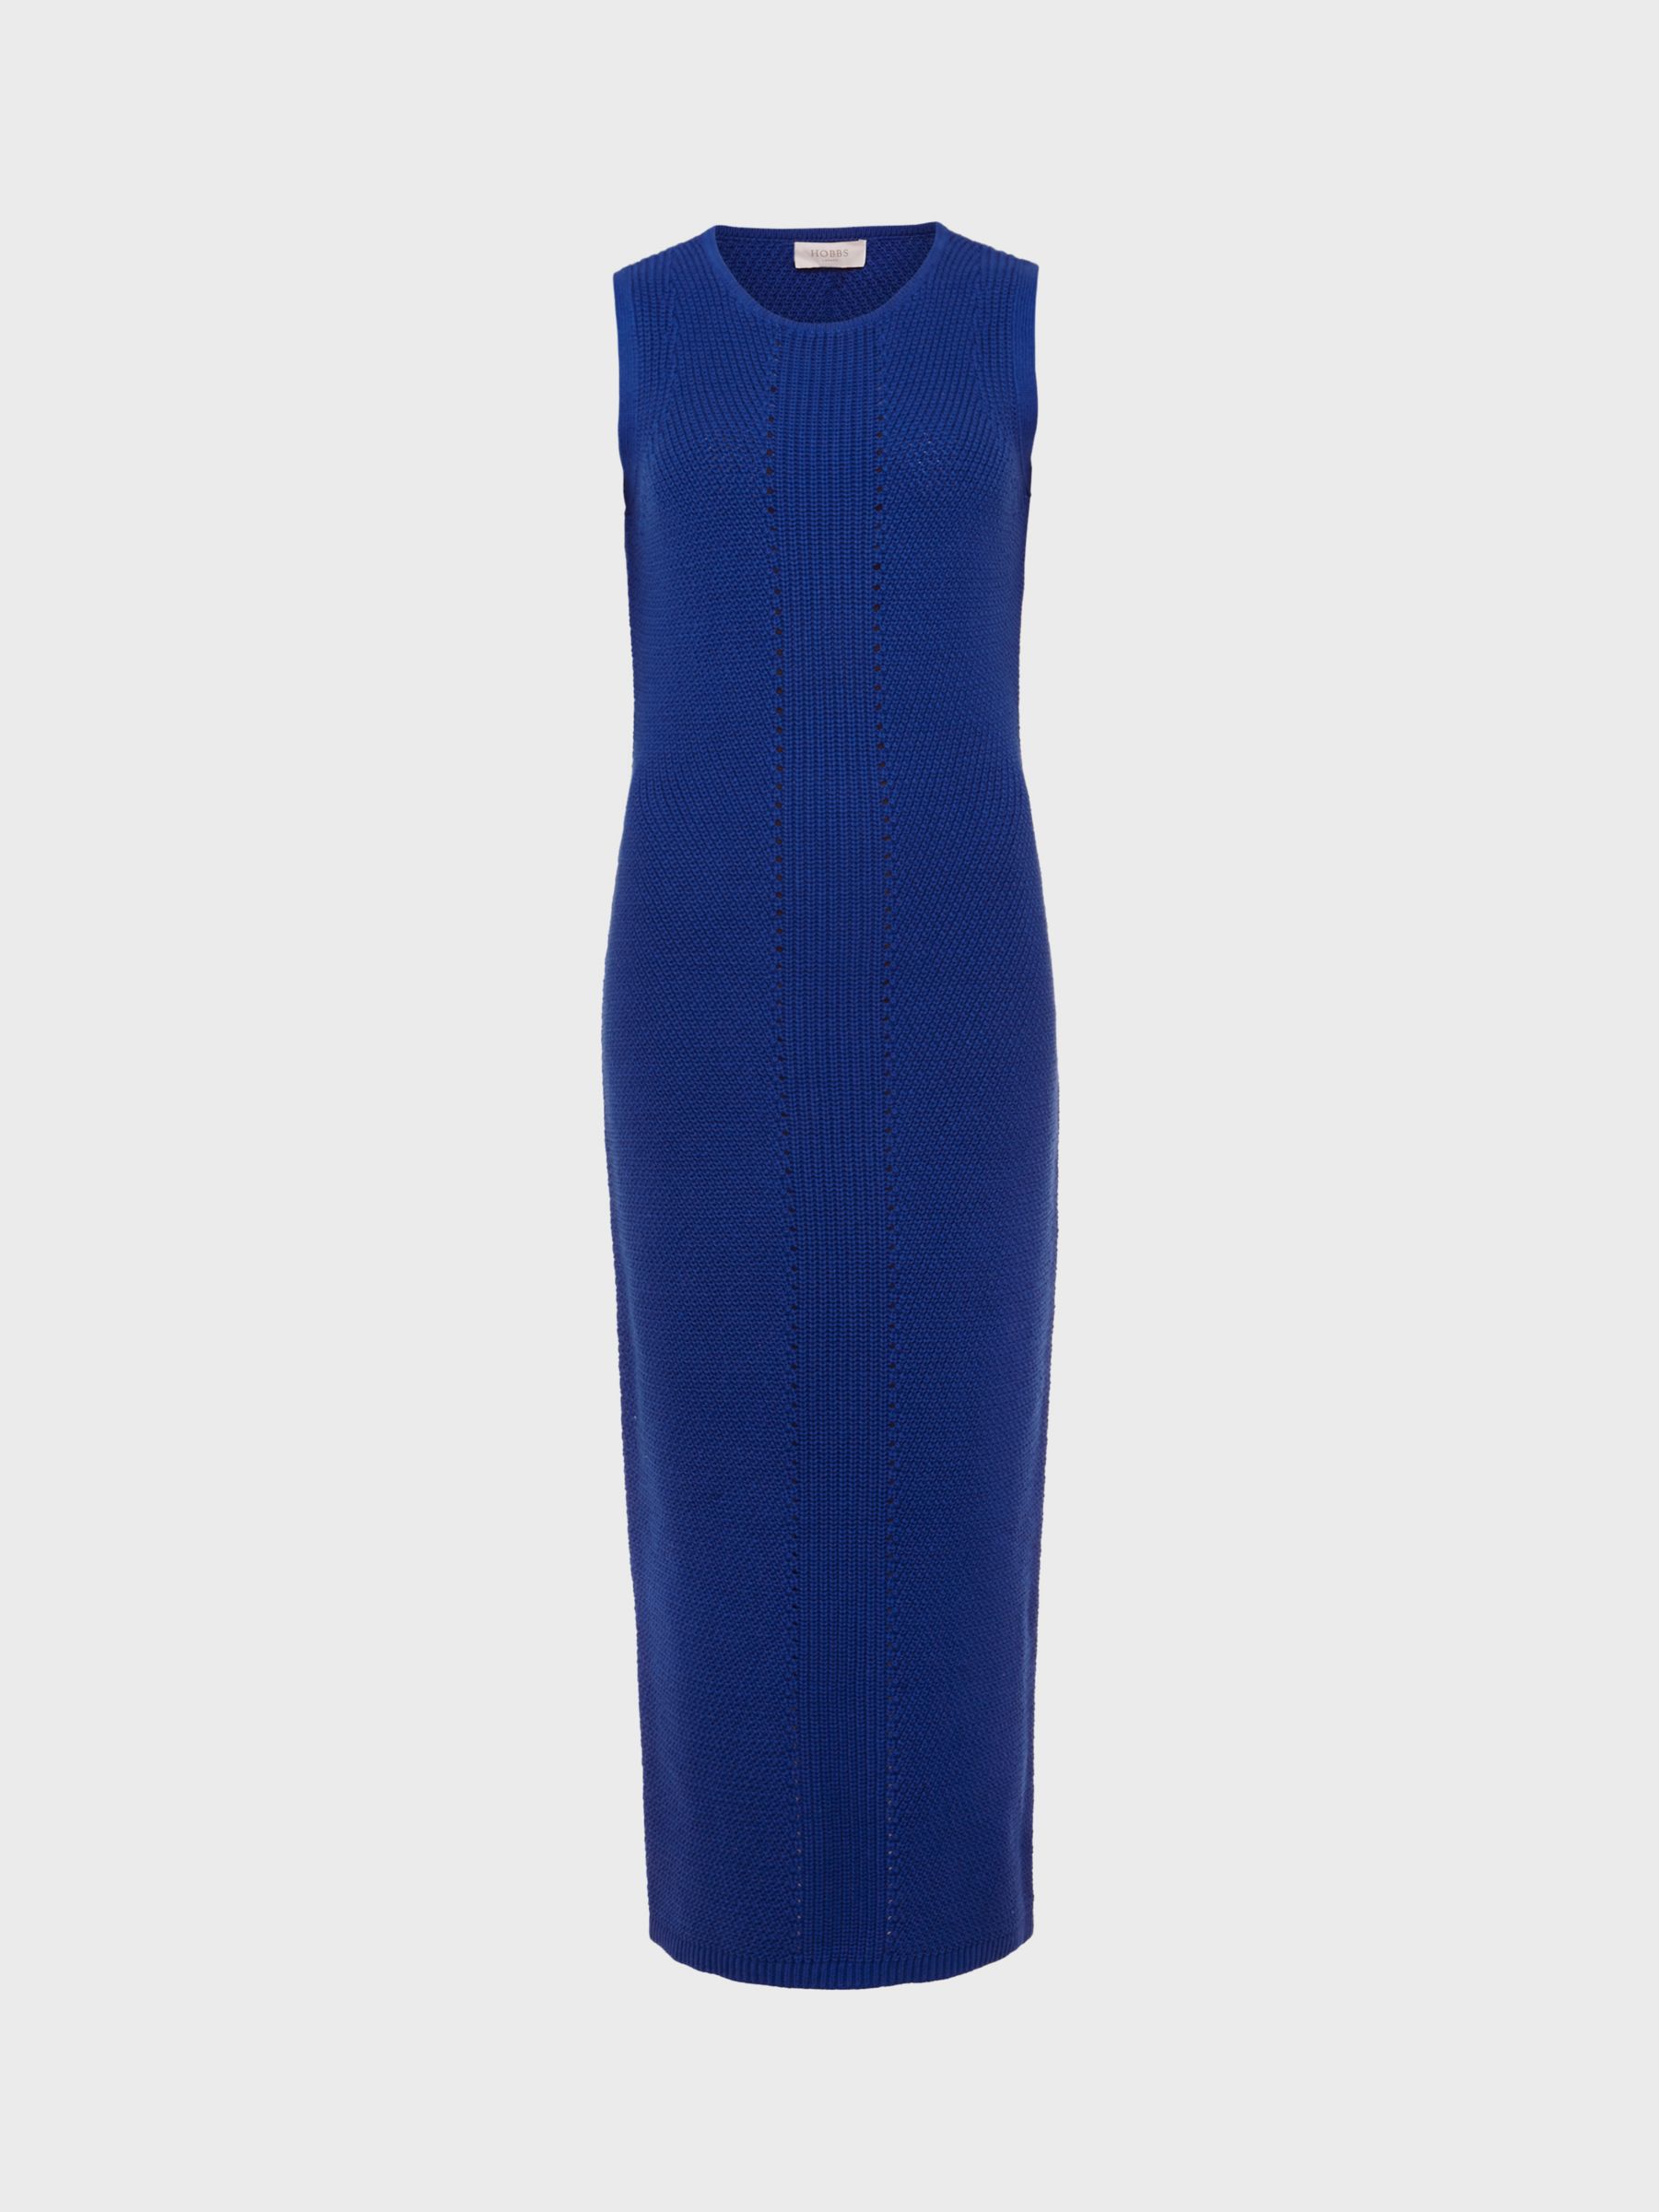 Hobbs Elea Knitted Midi Dress, Cobalt Blue at John Lewis & Partners